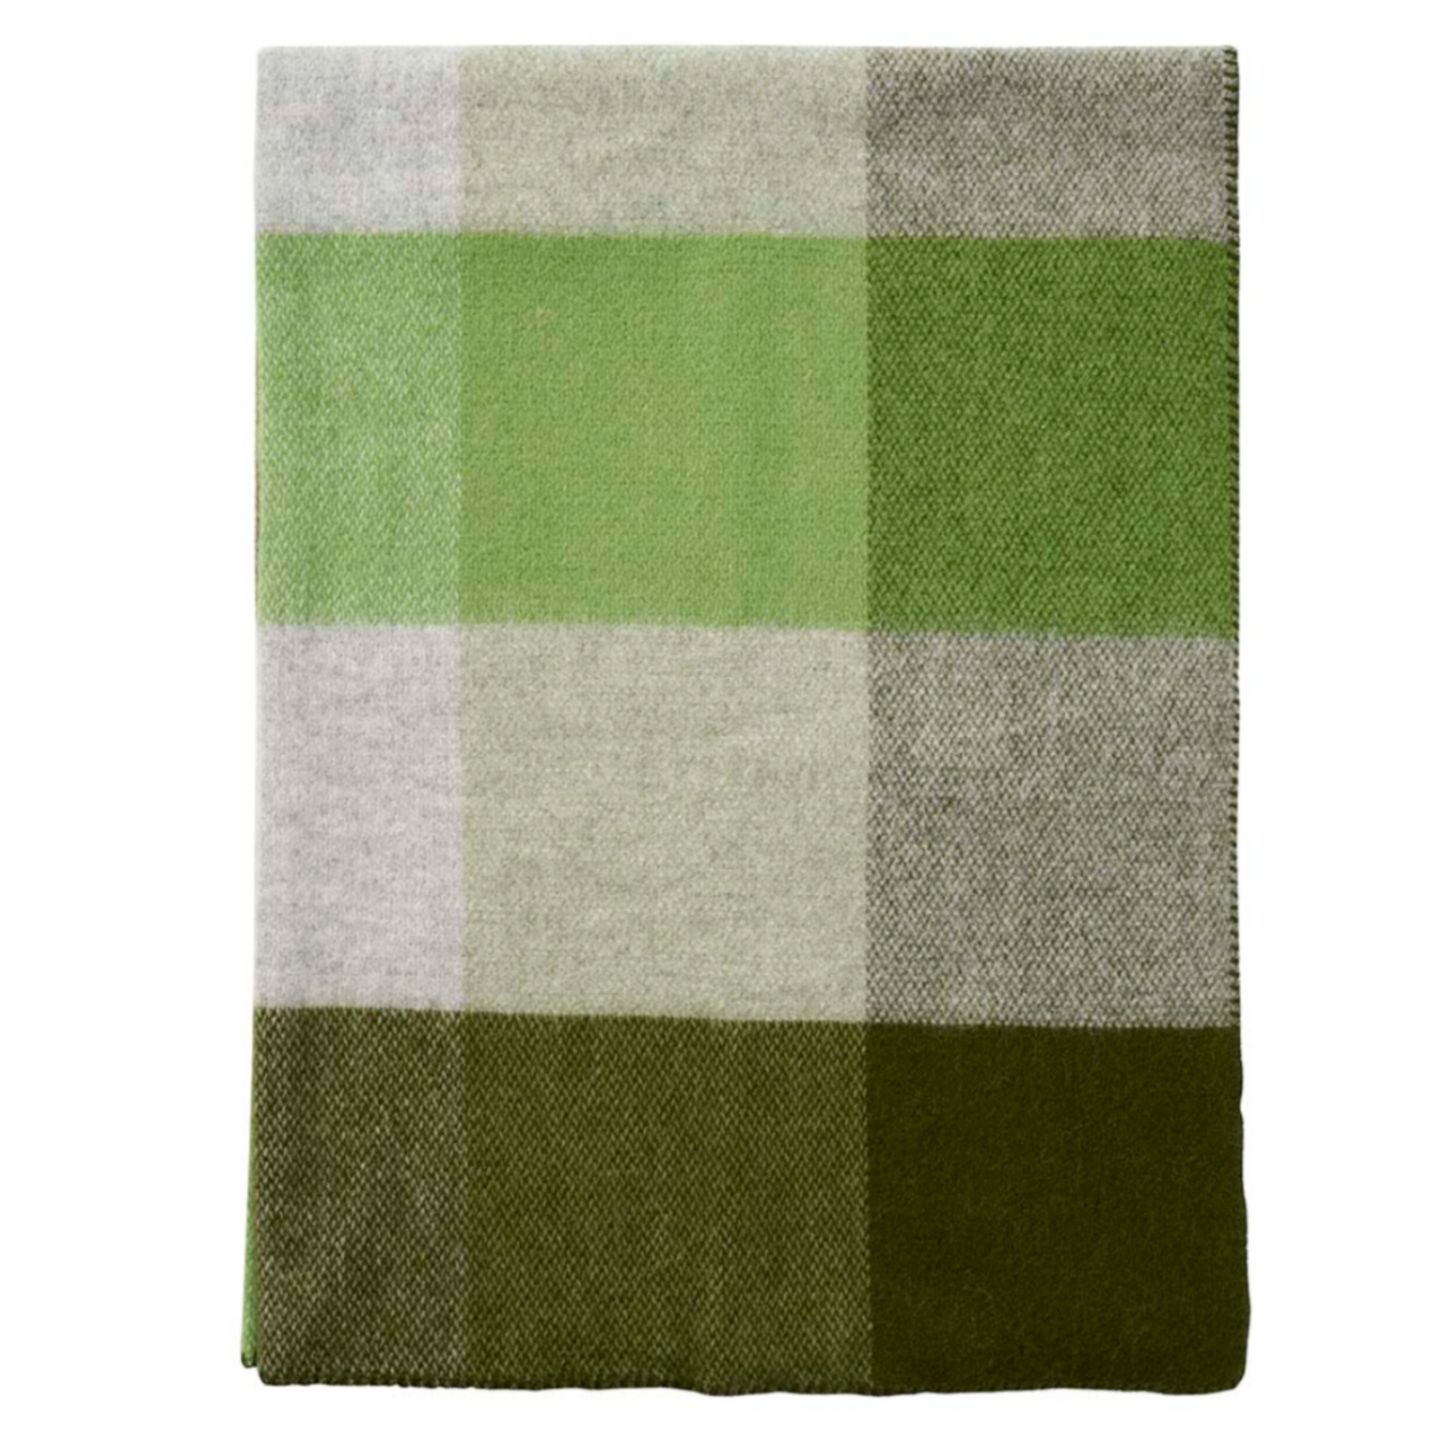 Klippan Wool Blanket 130x180cm, Block (6585873006657)